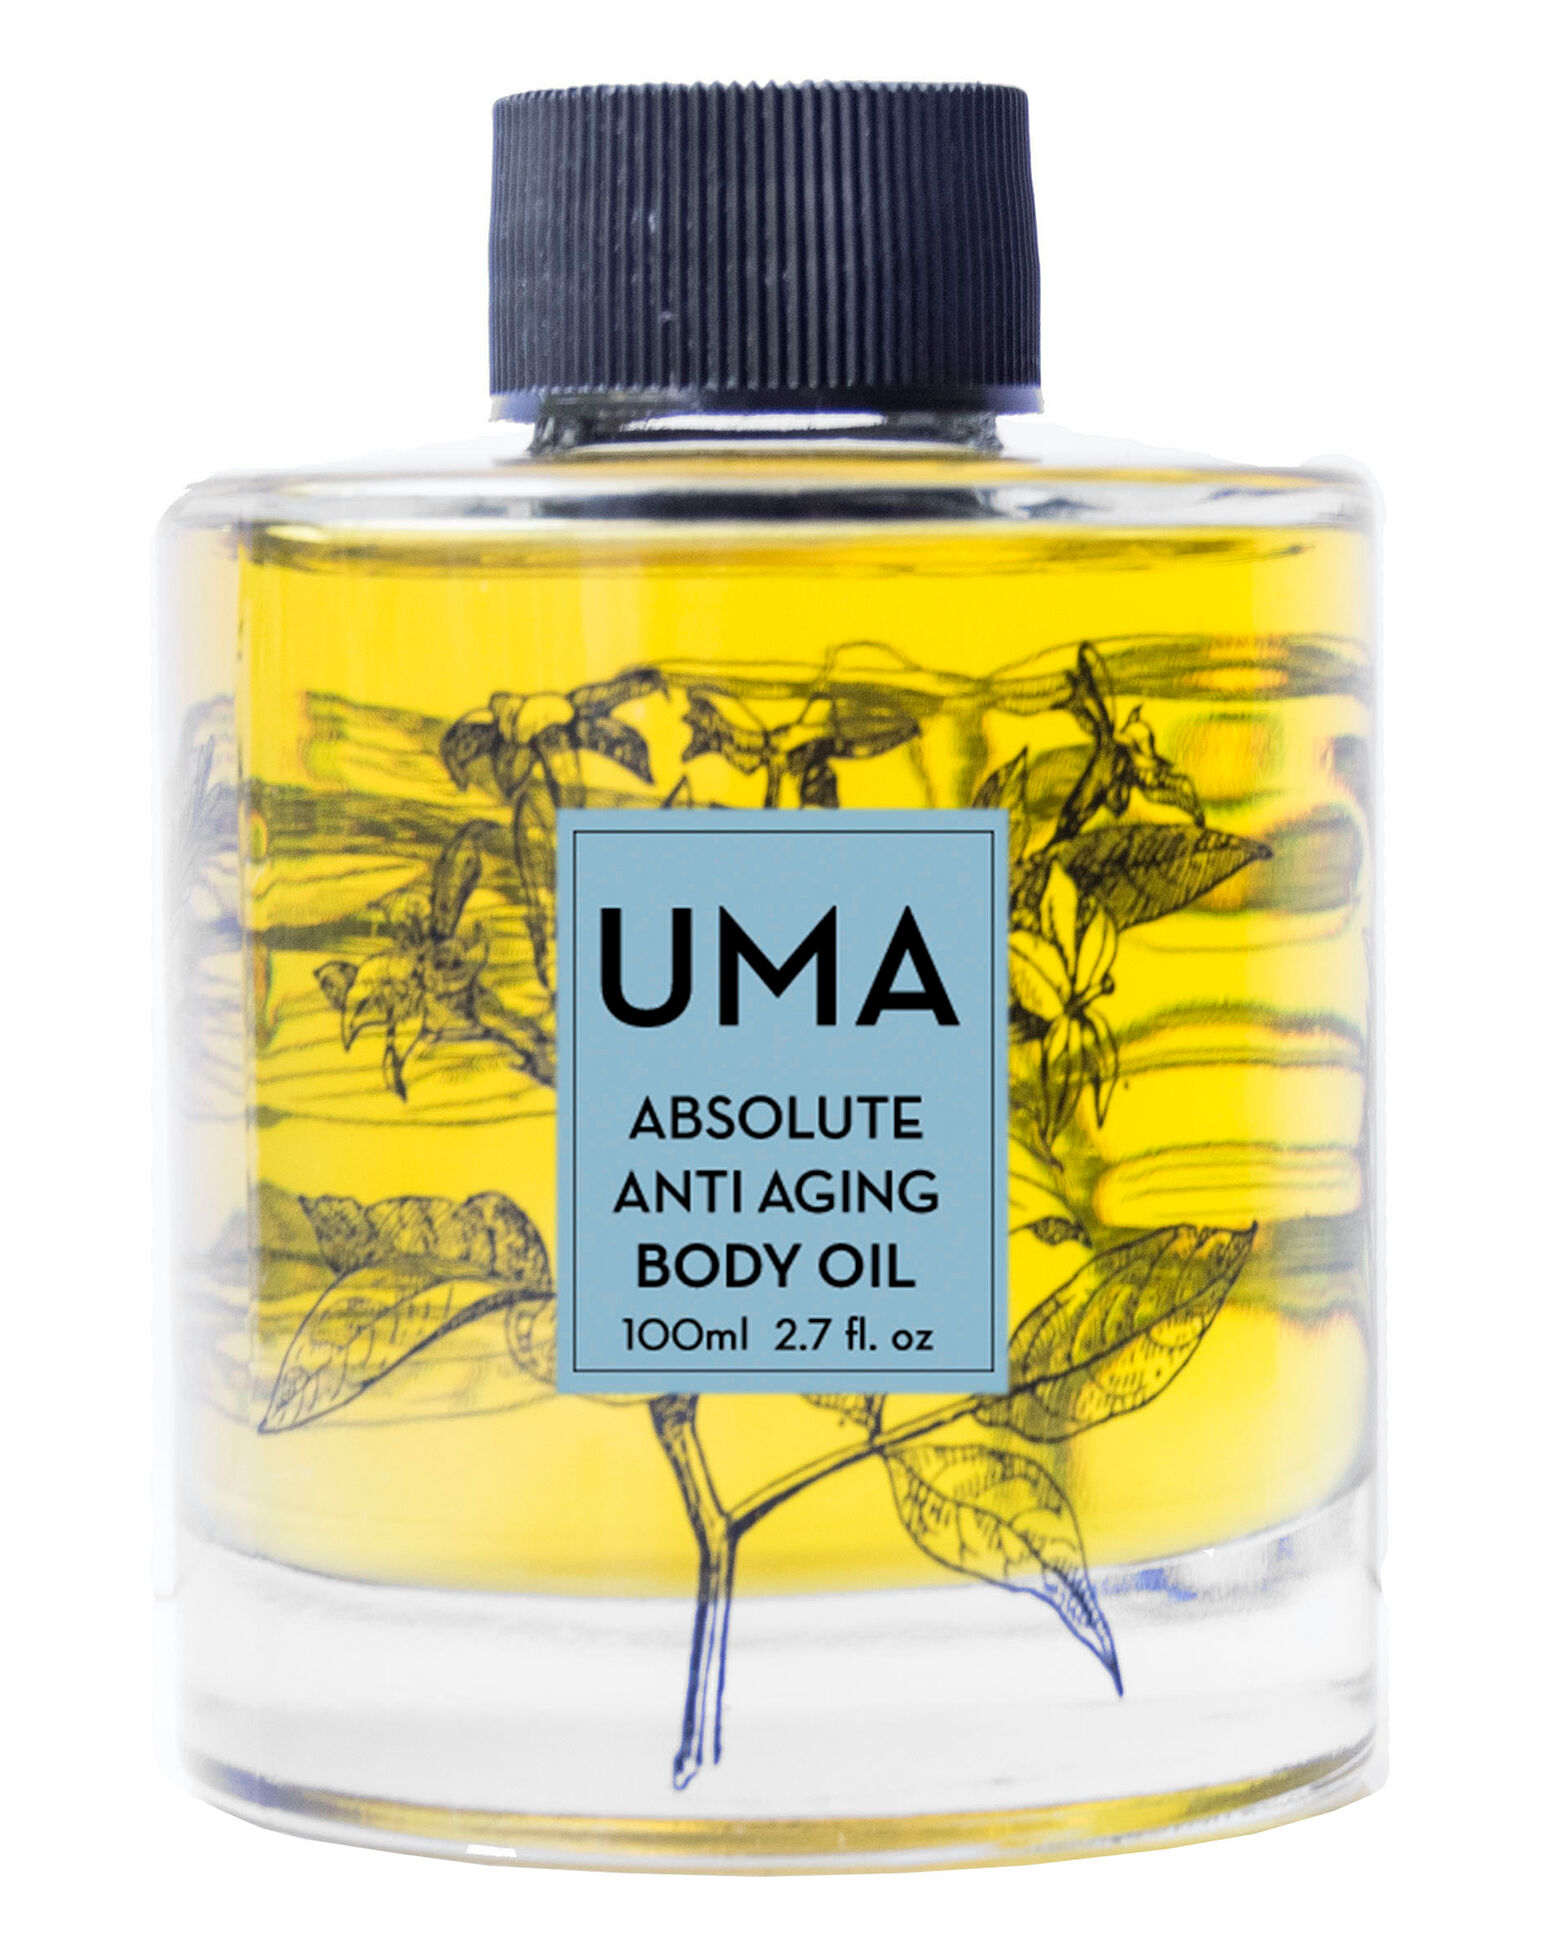 Uma - Absolute Anti Aging Body Oil